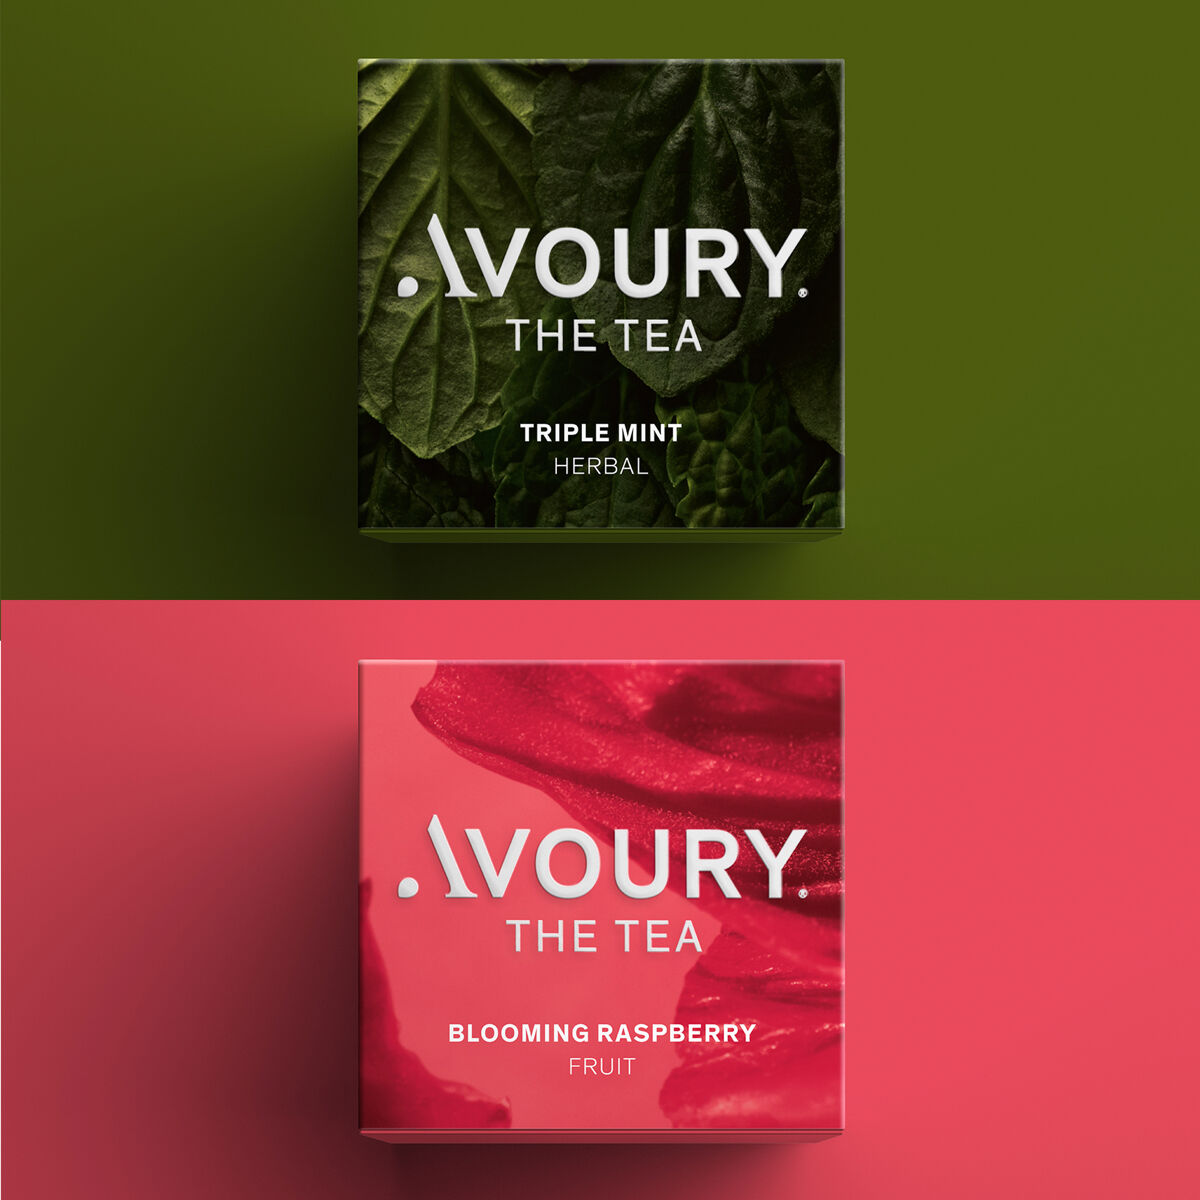 Avoury teas